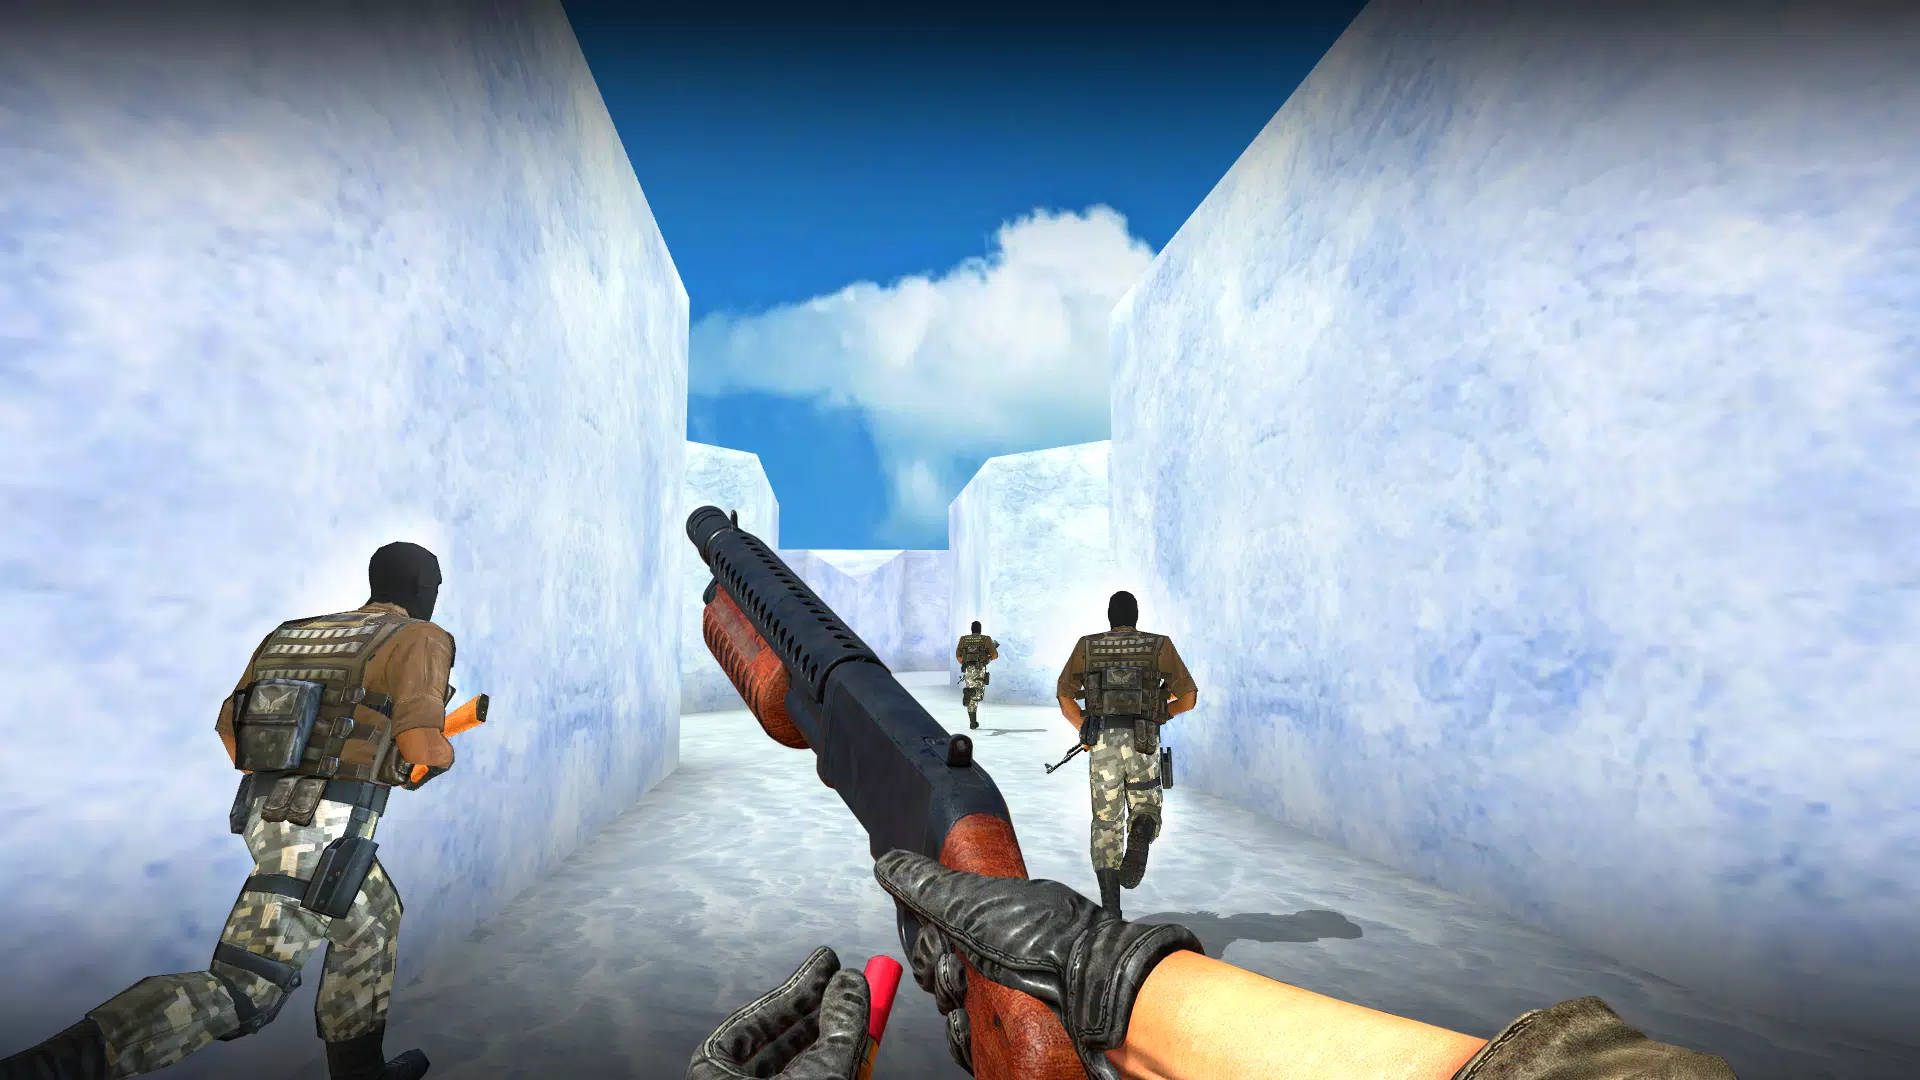 Counter Terrorist: Critical Strike CS Gun Shooter Game for Android